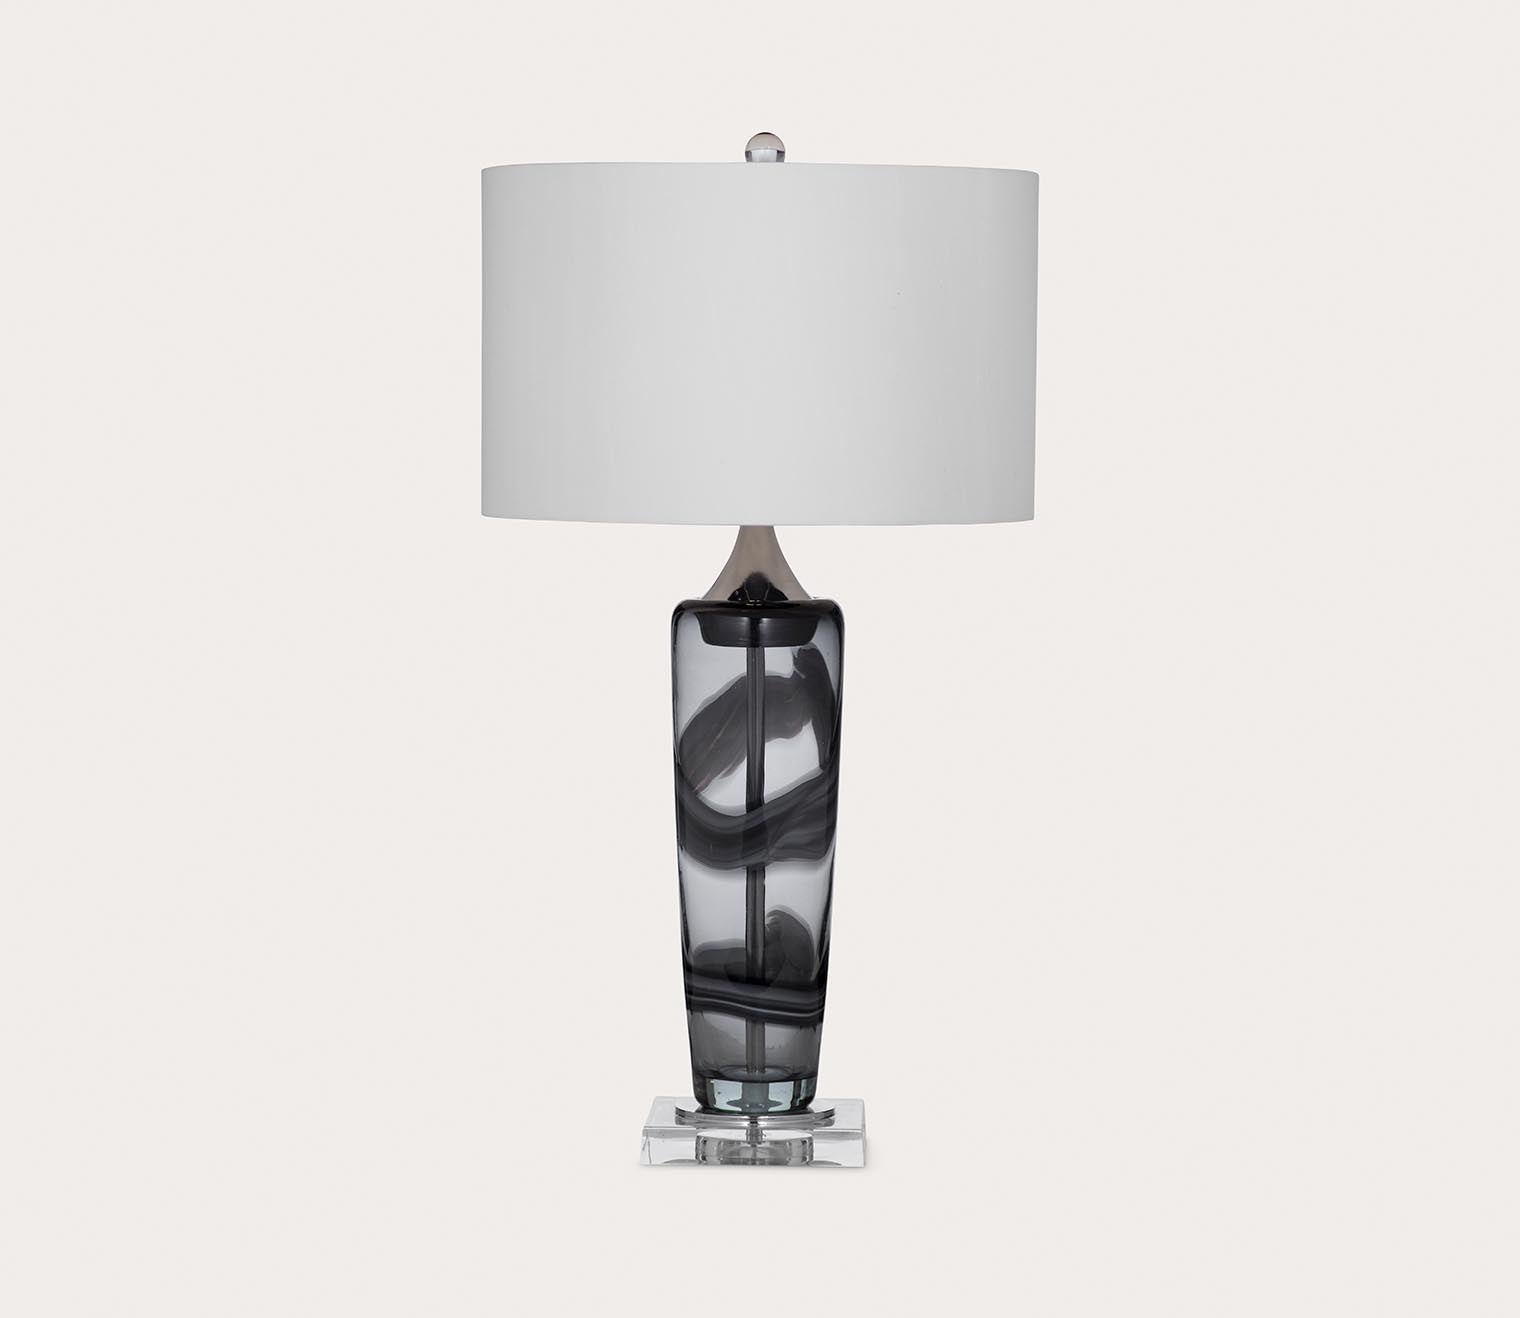 Nikola Glass Table Lamp by Bassett Mirror